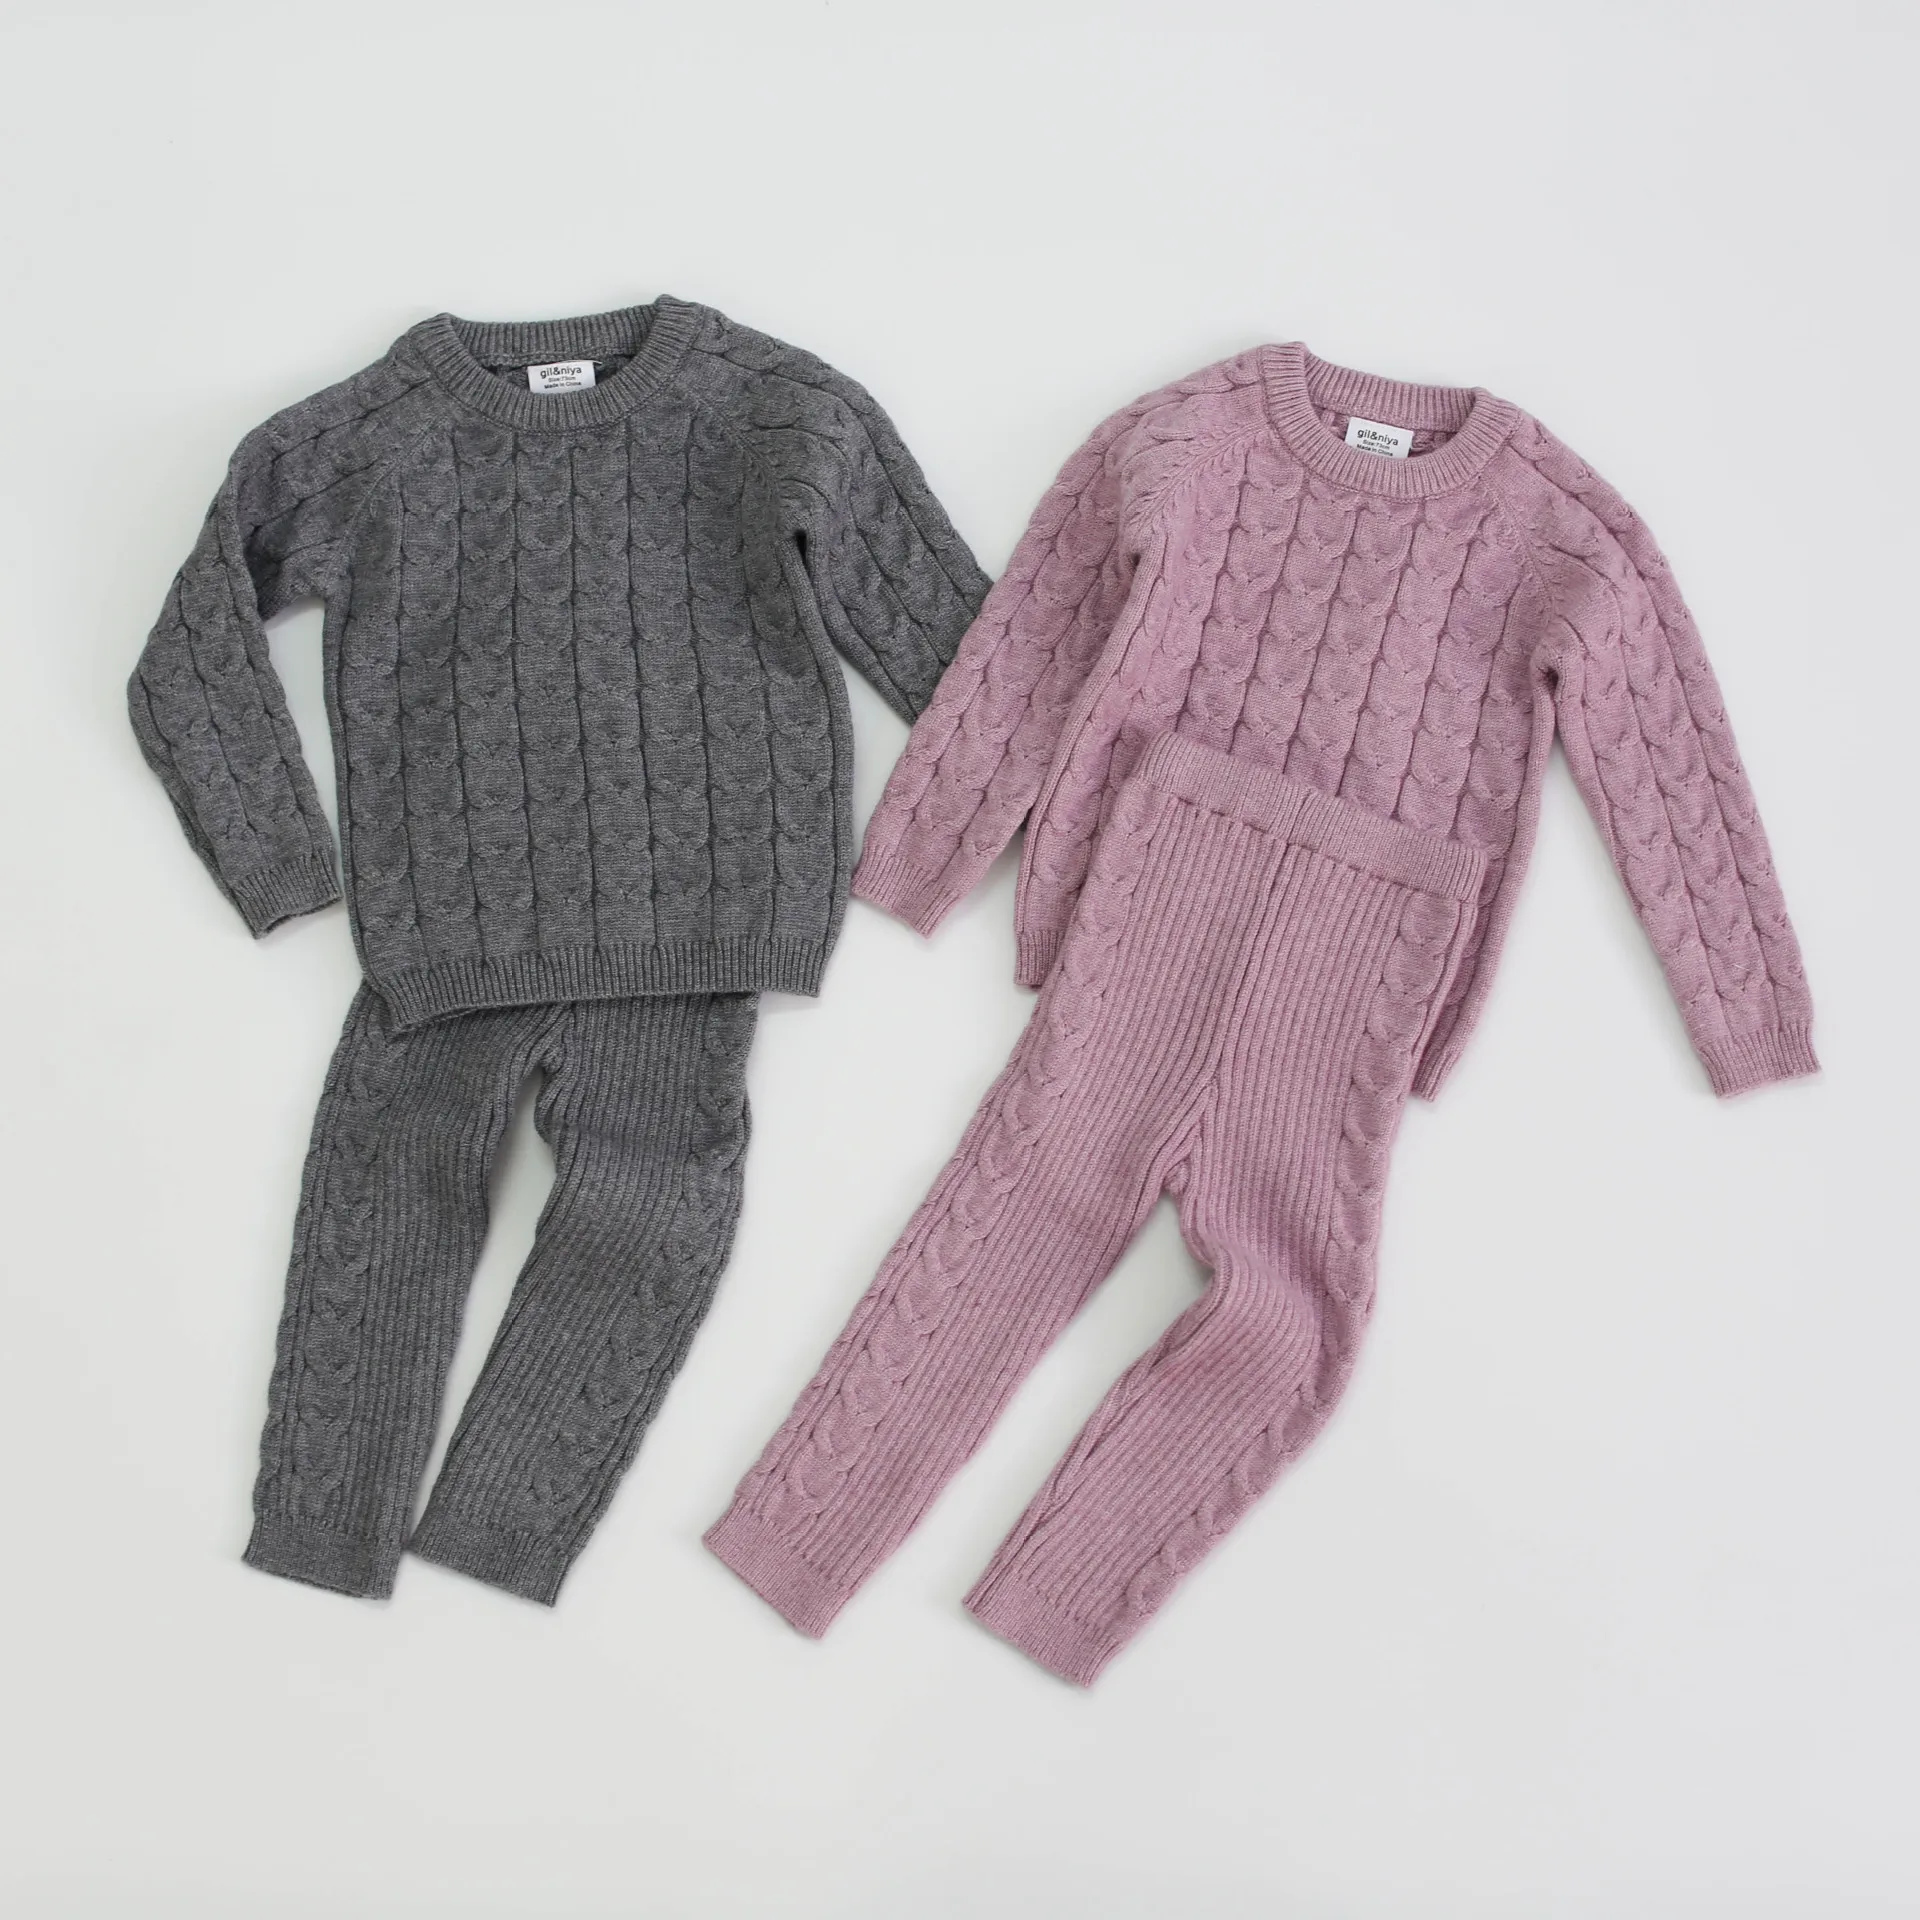 Autumn and winter new style children baby set knit upper garment leggings sweater set